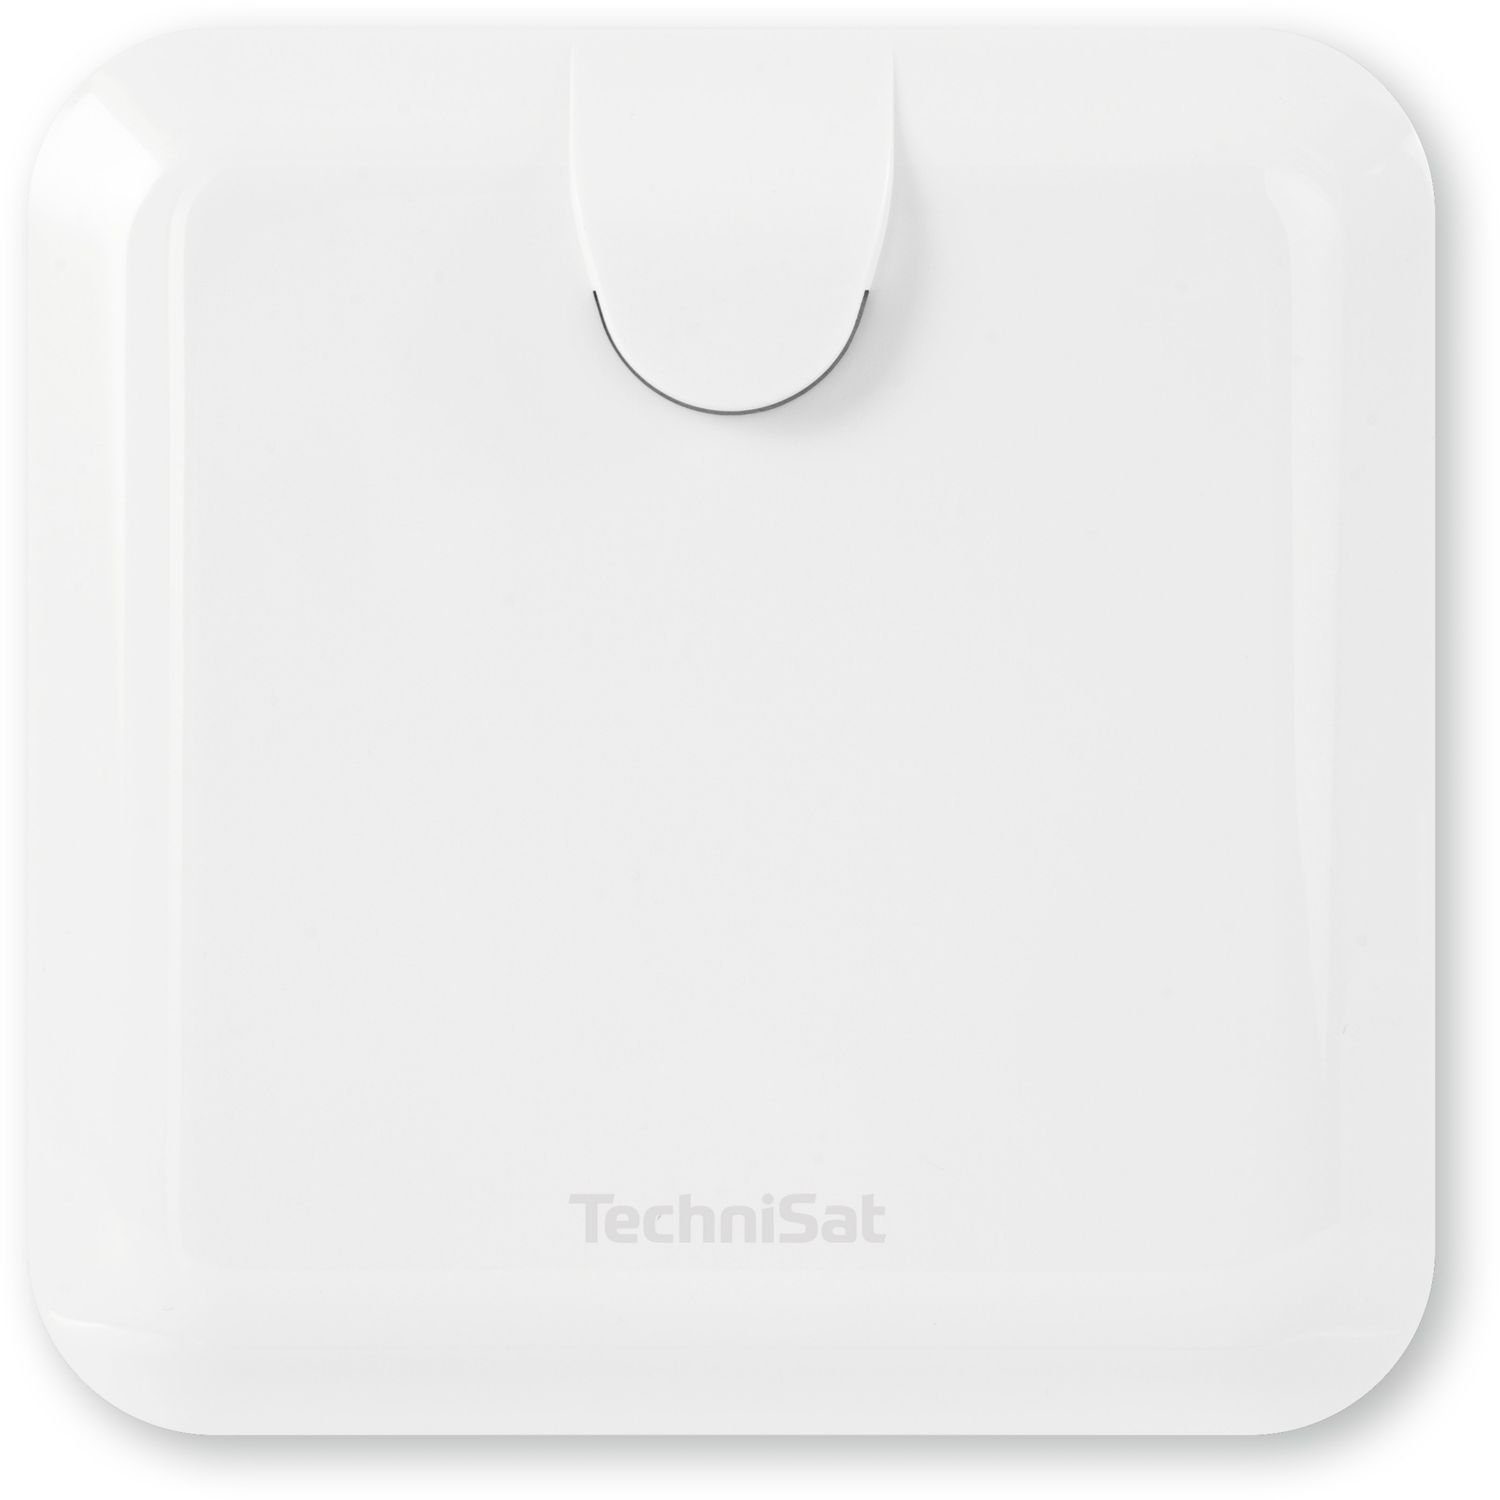 TechniSat Innensirene 1 Smart-Home-Alarm Smart-Home-Zubehör